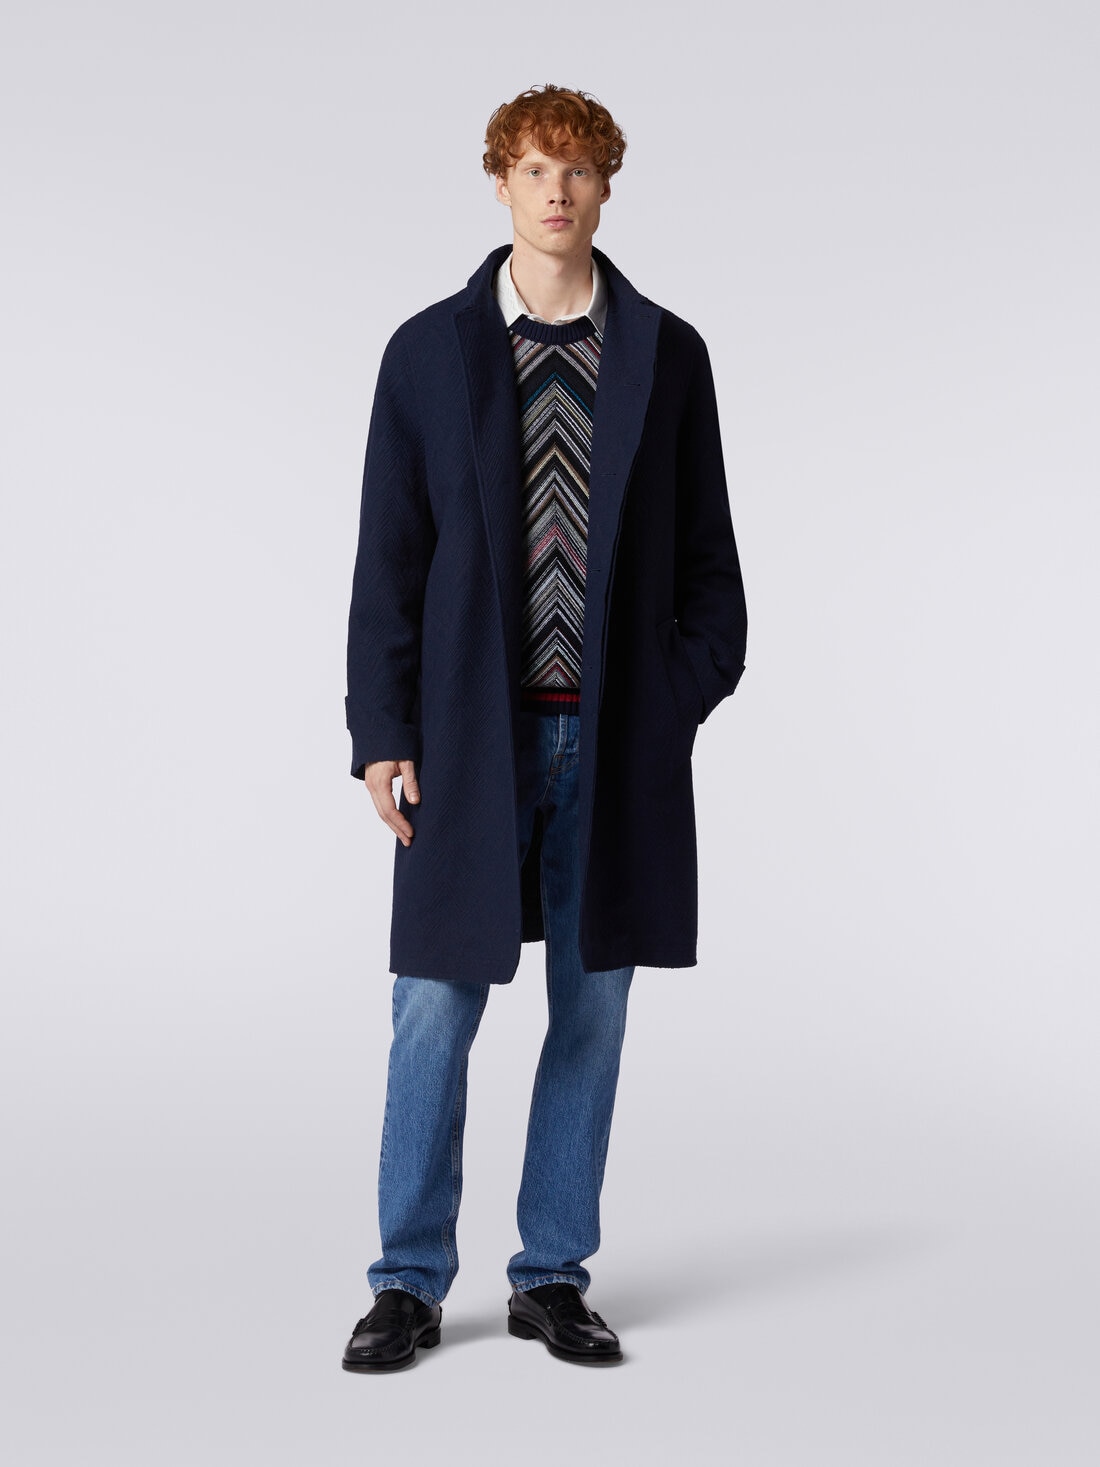 Jacquard wool blend coat with zigzag pattern, Dark Blue - US24SC07BW00R493924 - 1